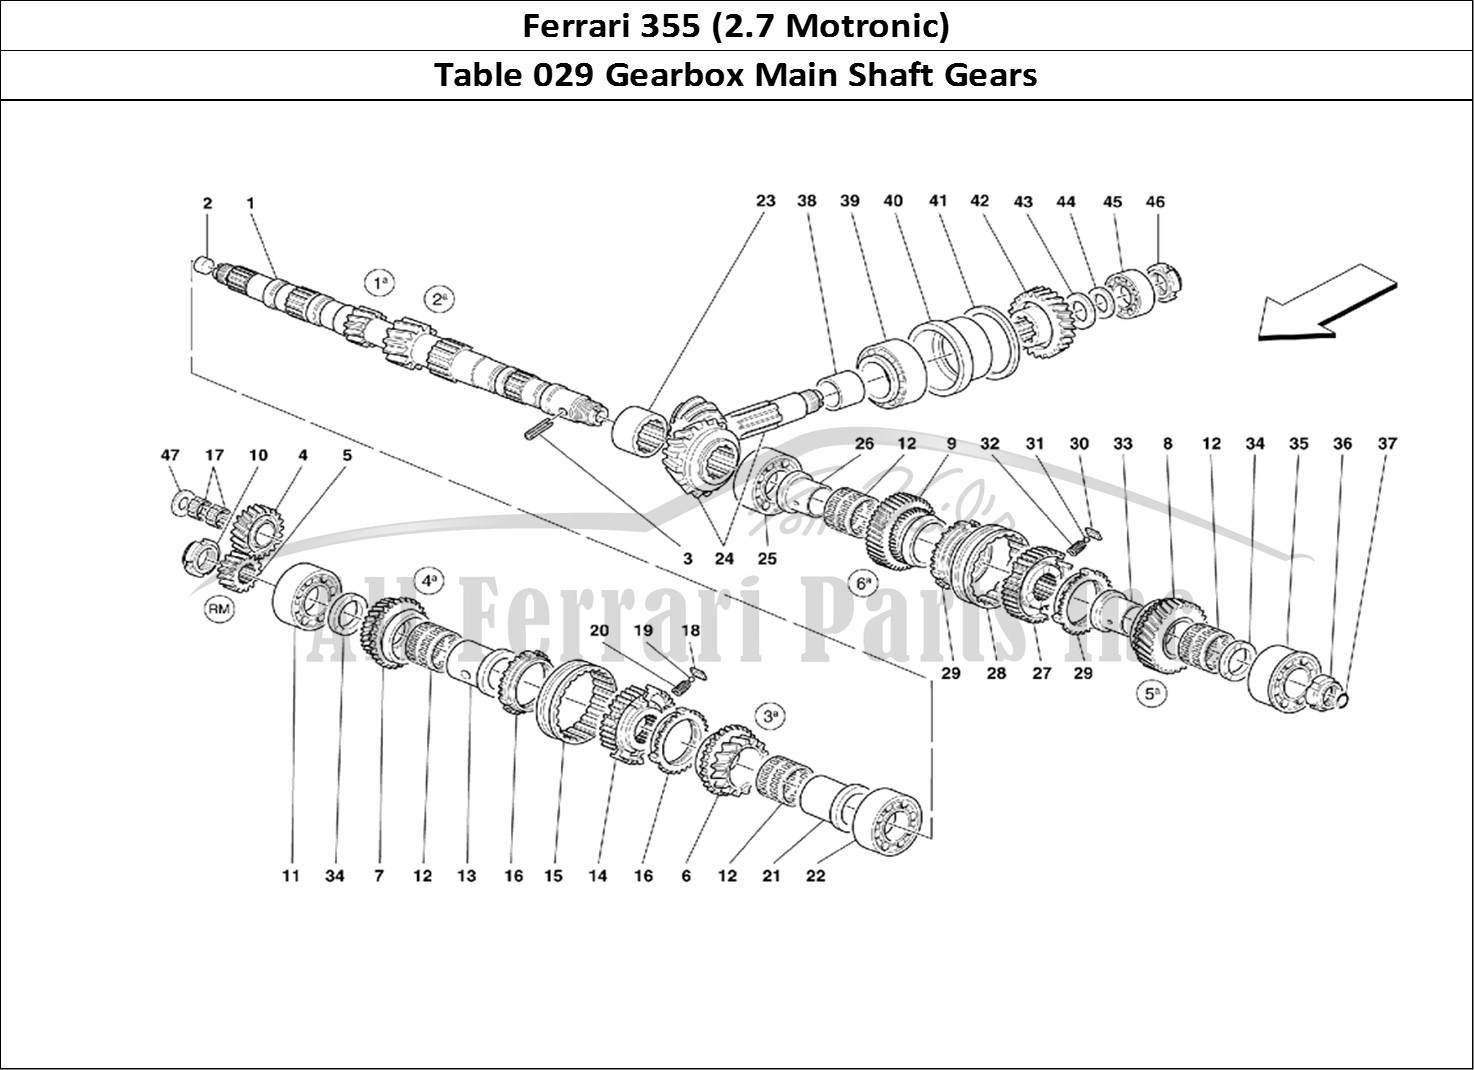 Ferrari Parts Ferrari 355 (2.7 Motronic) Page 029 Main Shaft Gears